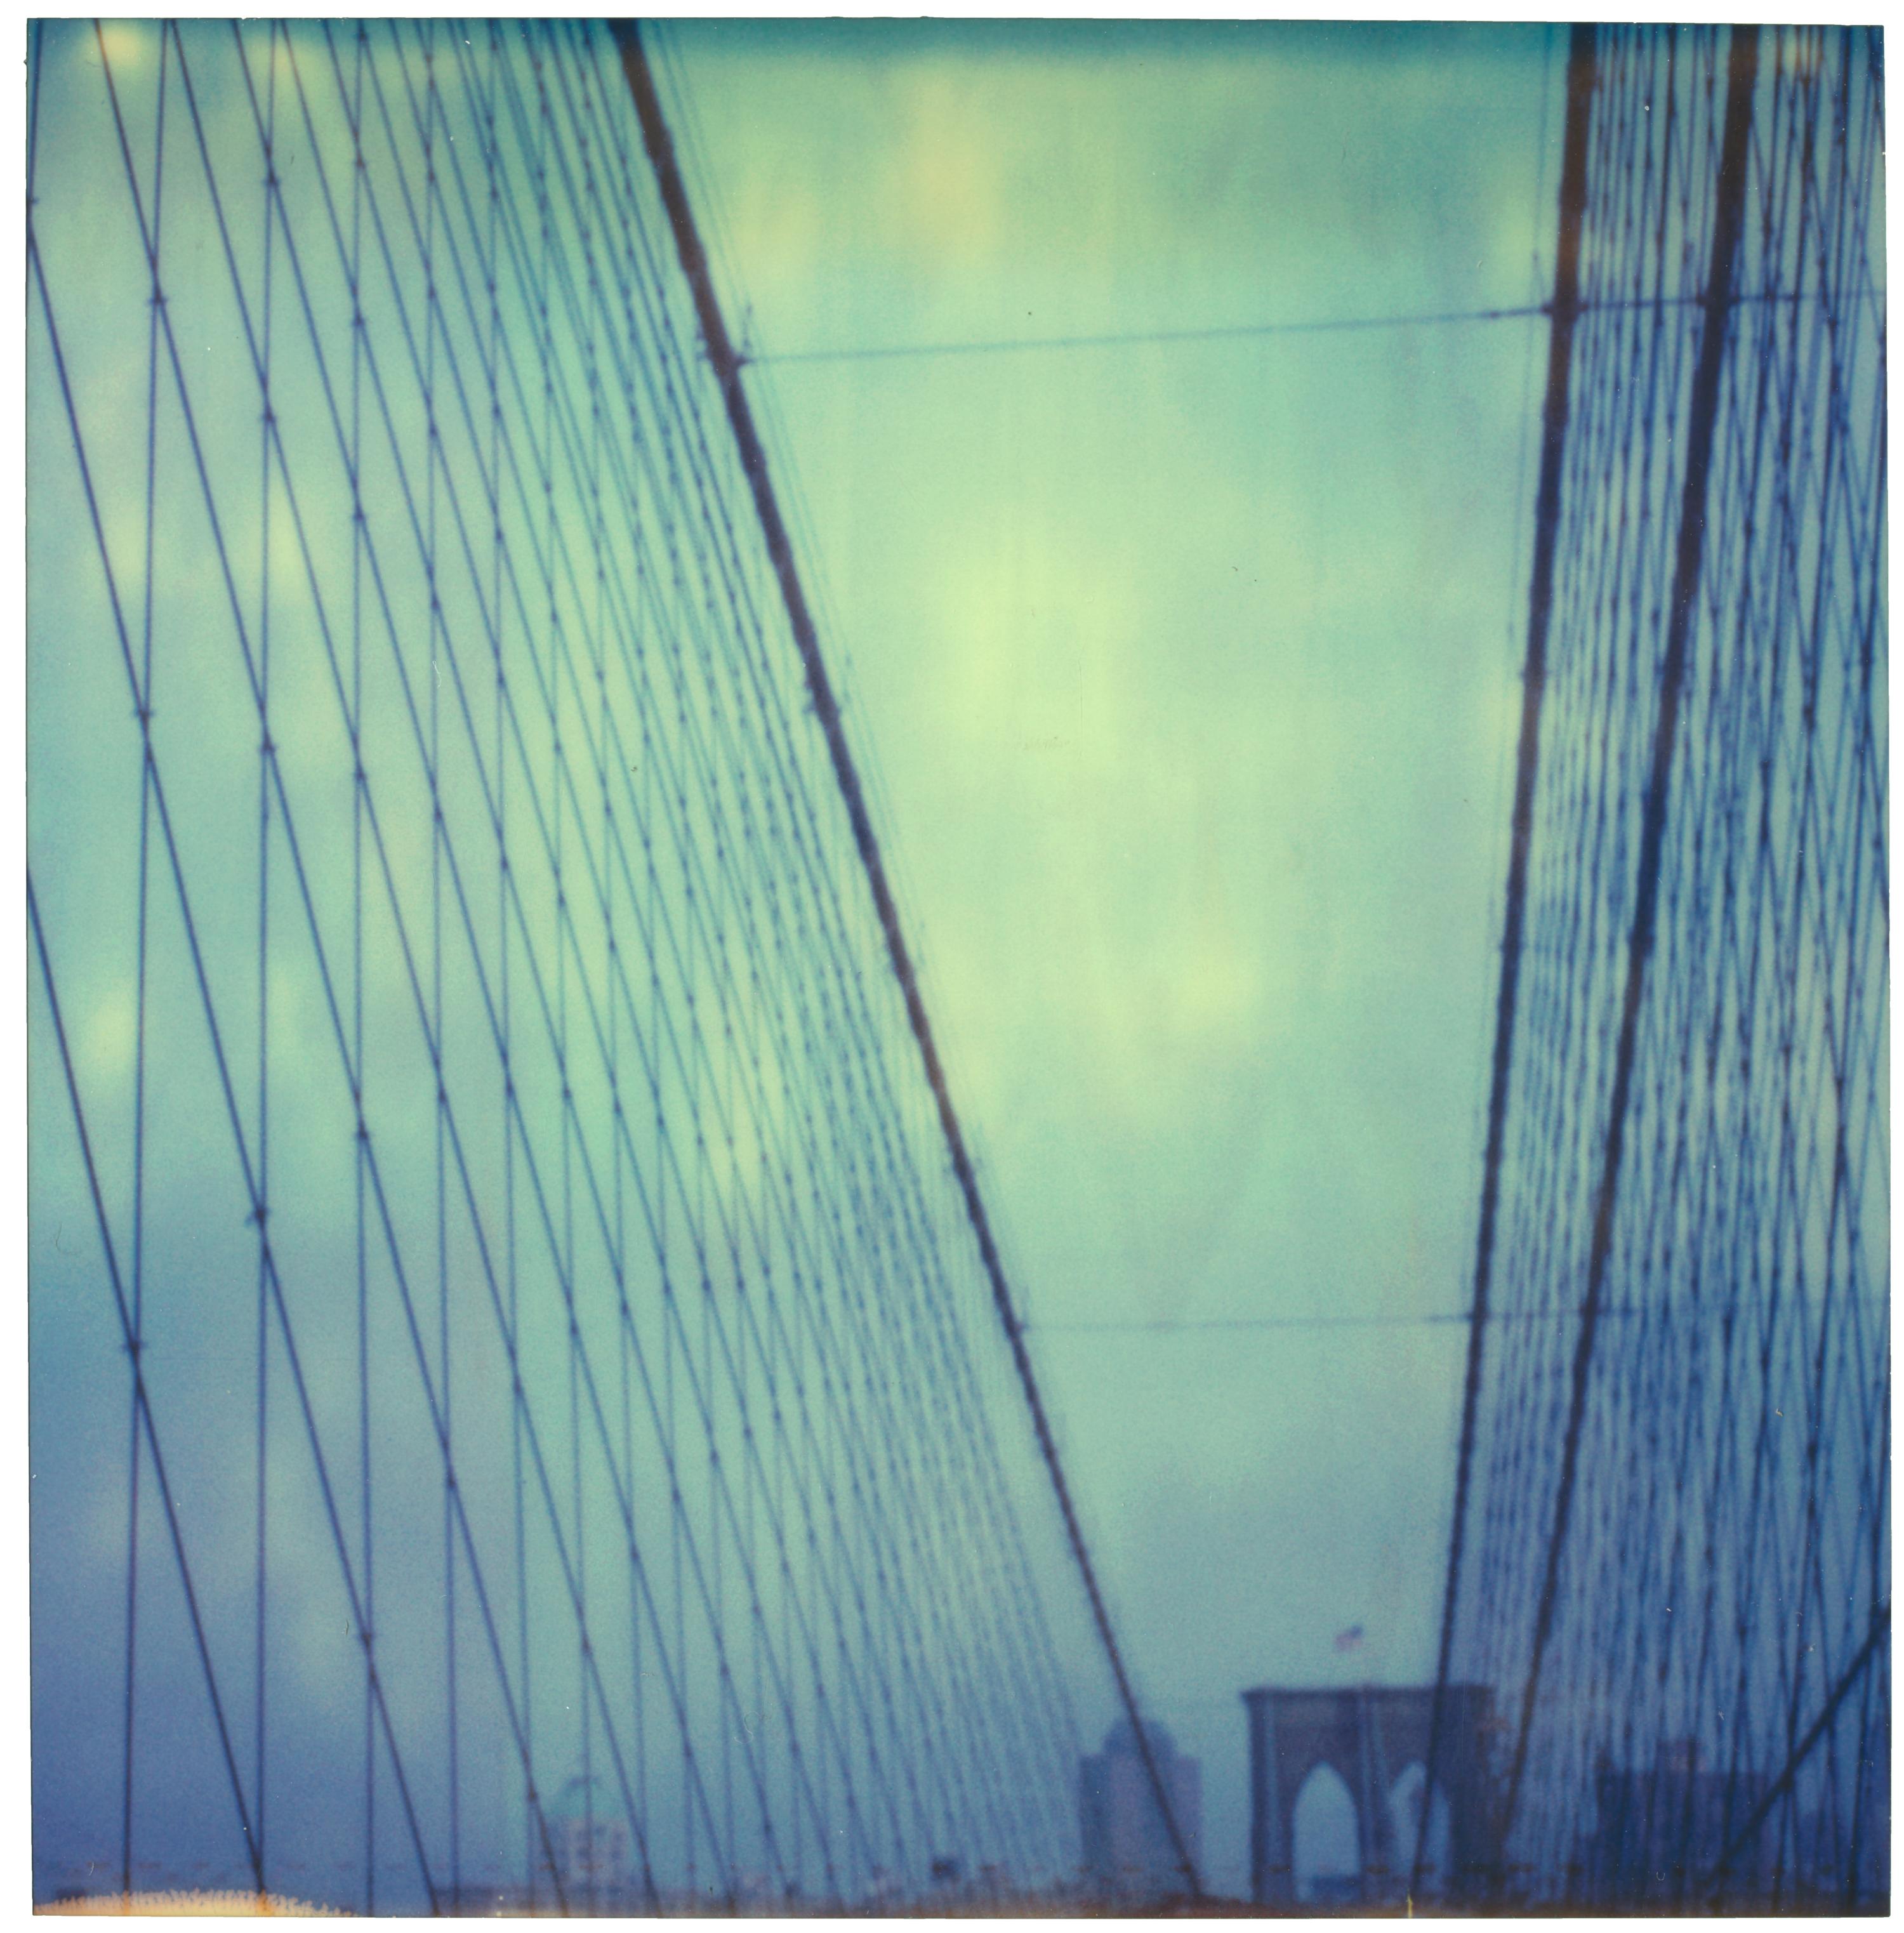 Brooklyn Bridge (Stay) - Polaroid, 21st Century, Contemporary, Color